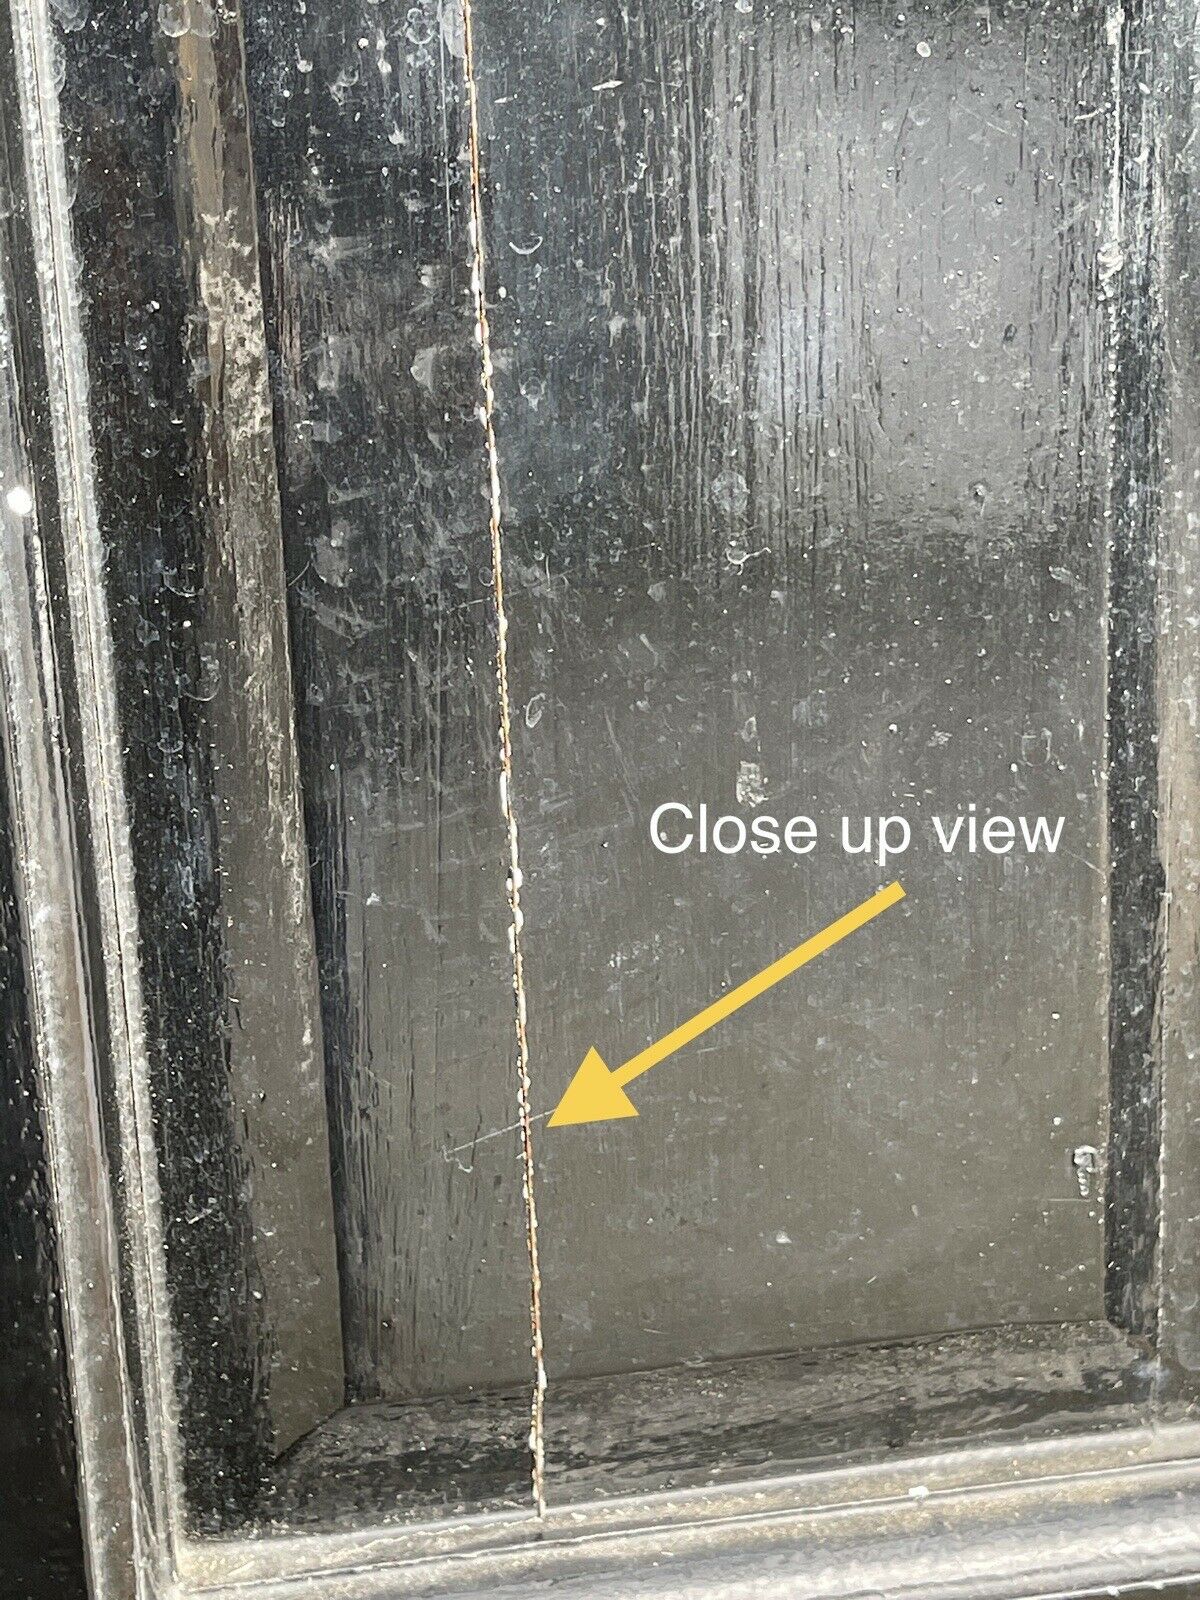 Reclaimed York Wooden Panel External Front Door Bulls Eye Glass 2035 x 814mm